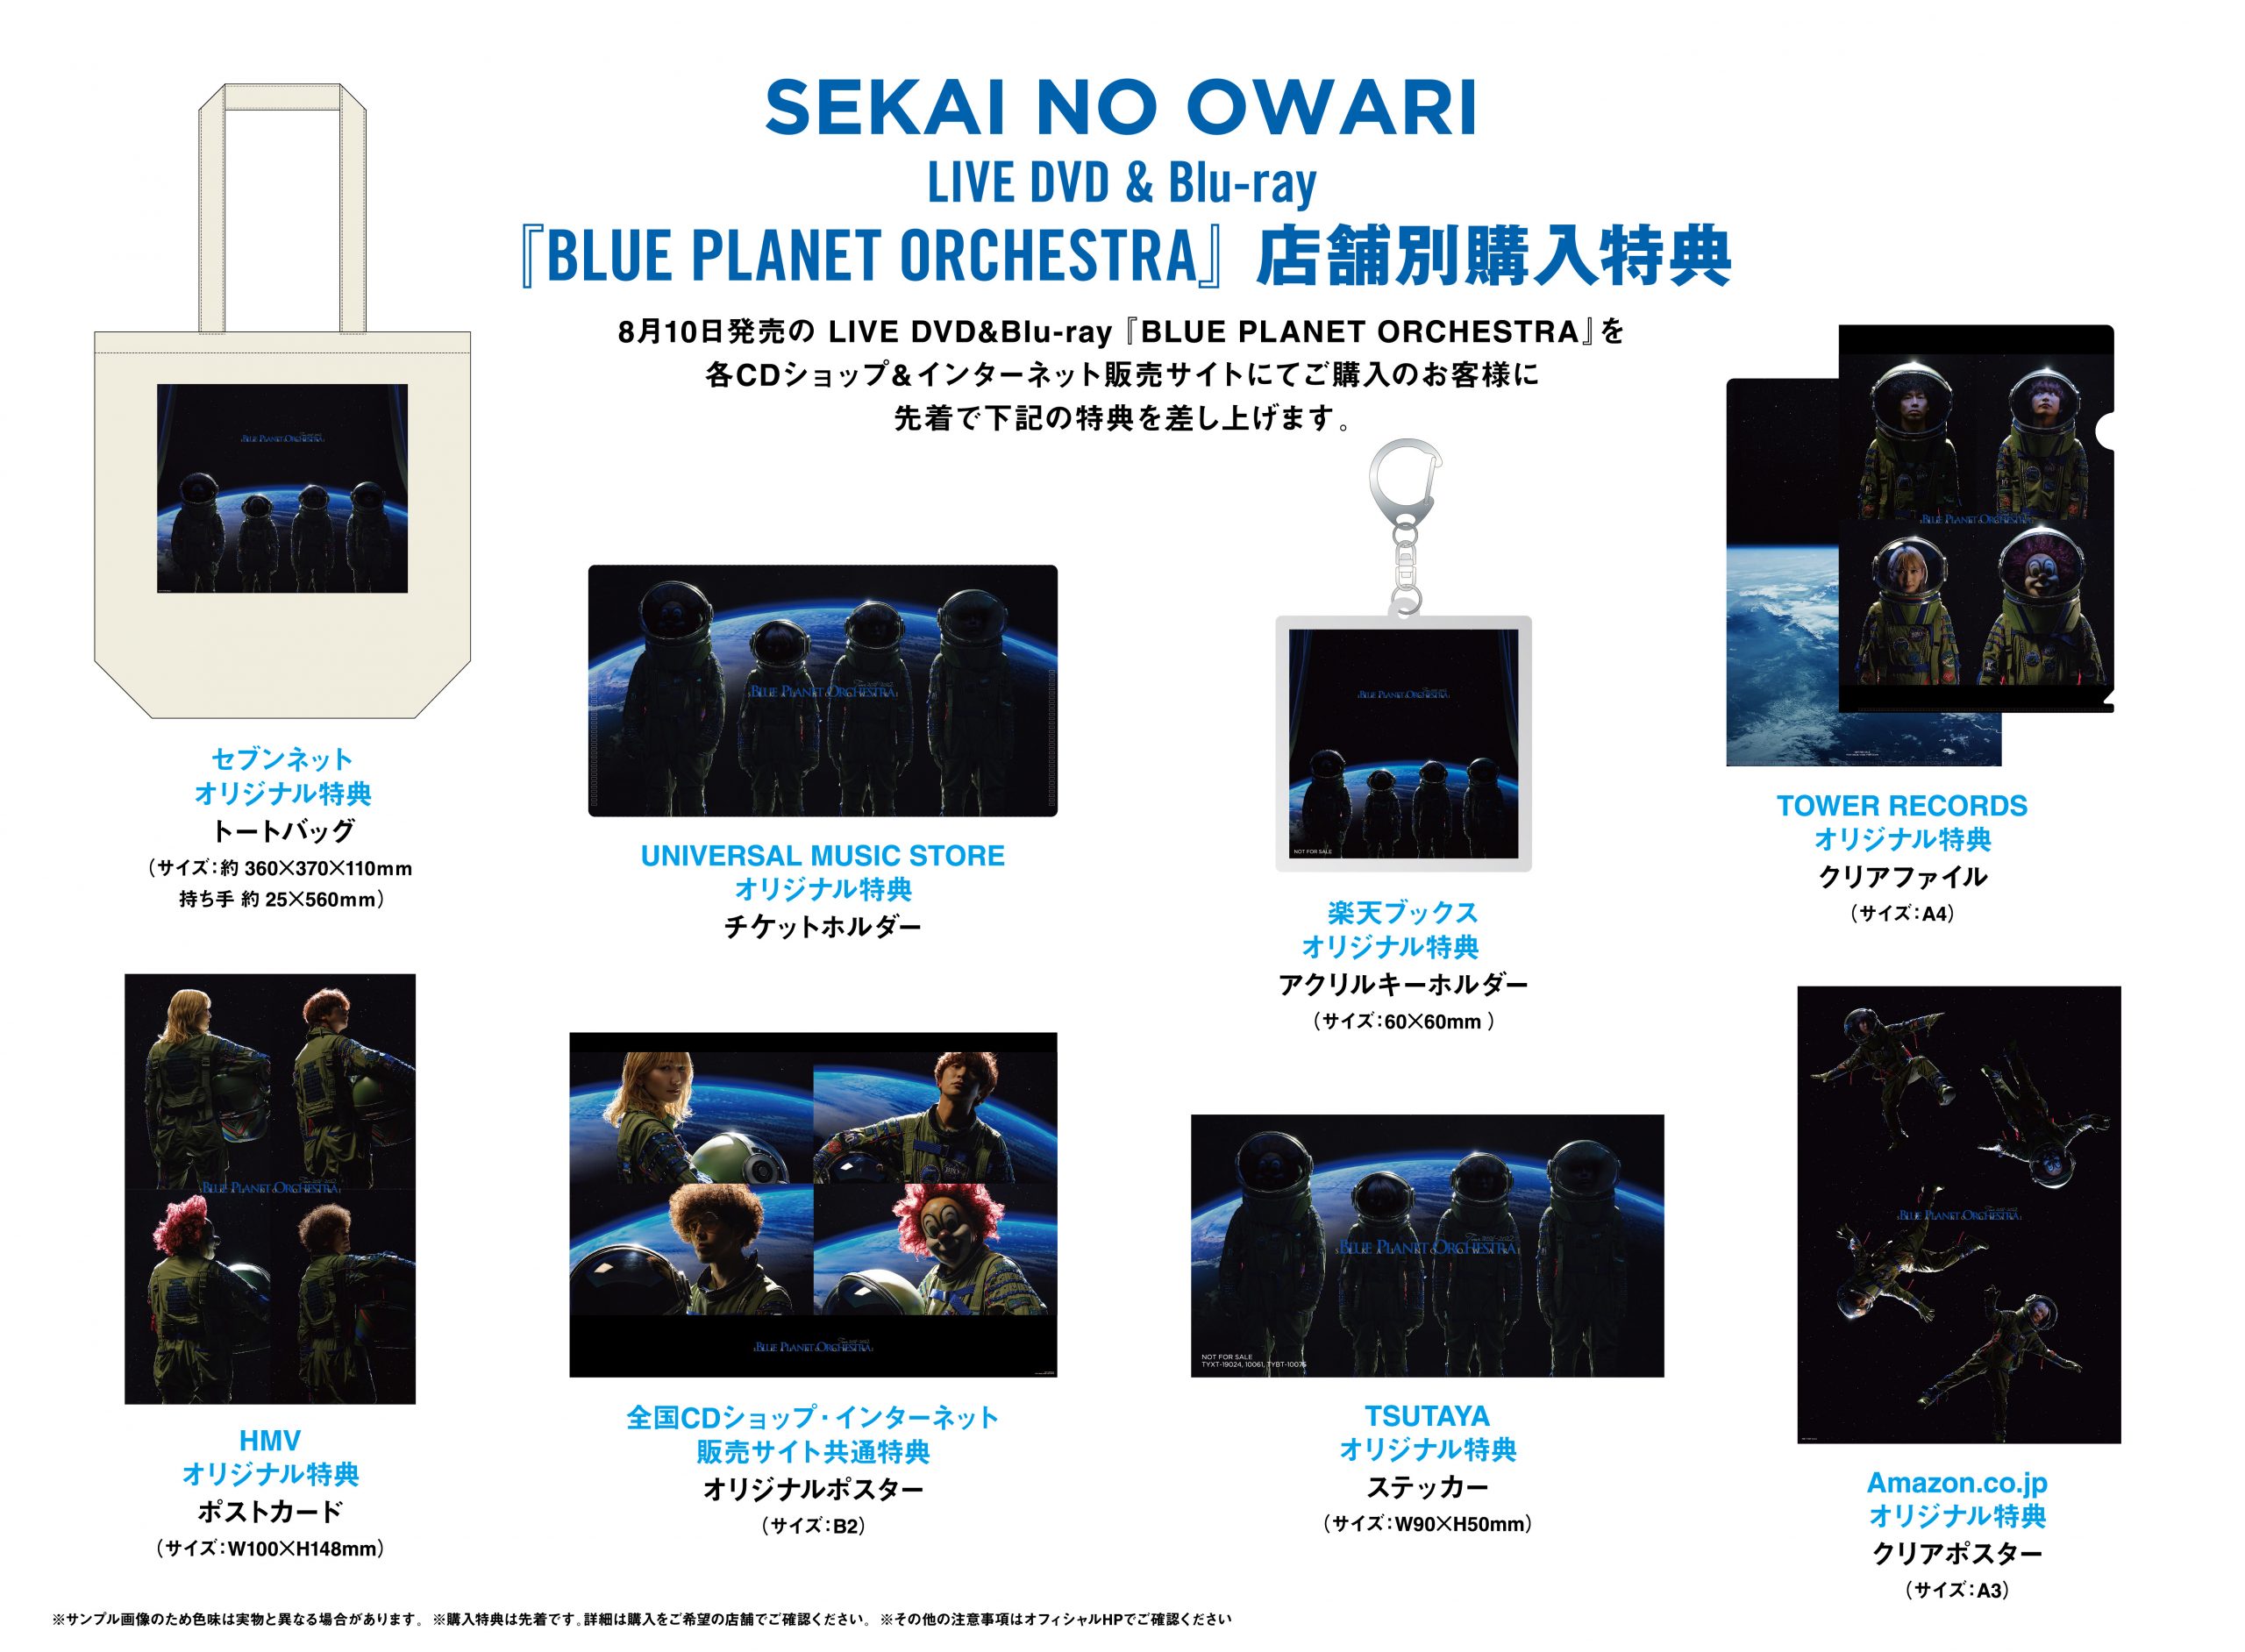 SEKAI NO OWARI LIVE DVD & Blu-ray『BLUE PLANET ORCHESTRA』購入特典 